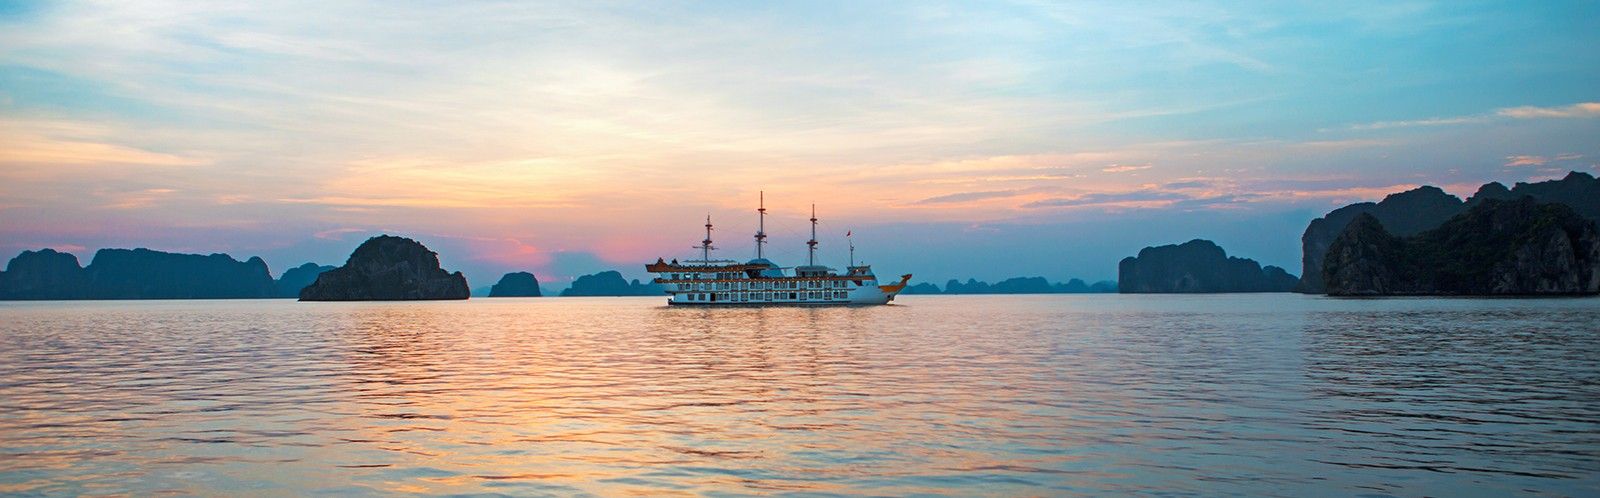 Halong Bay cruises listing, photo by Indochina Junk